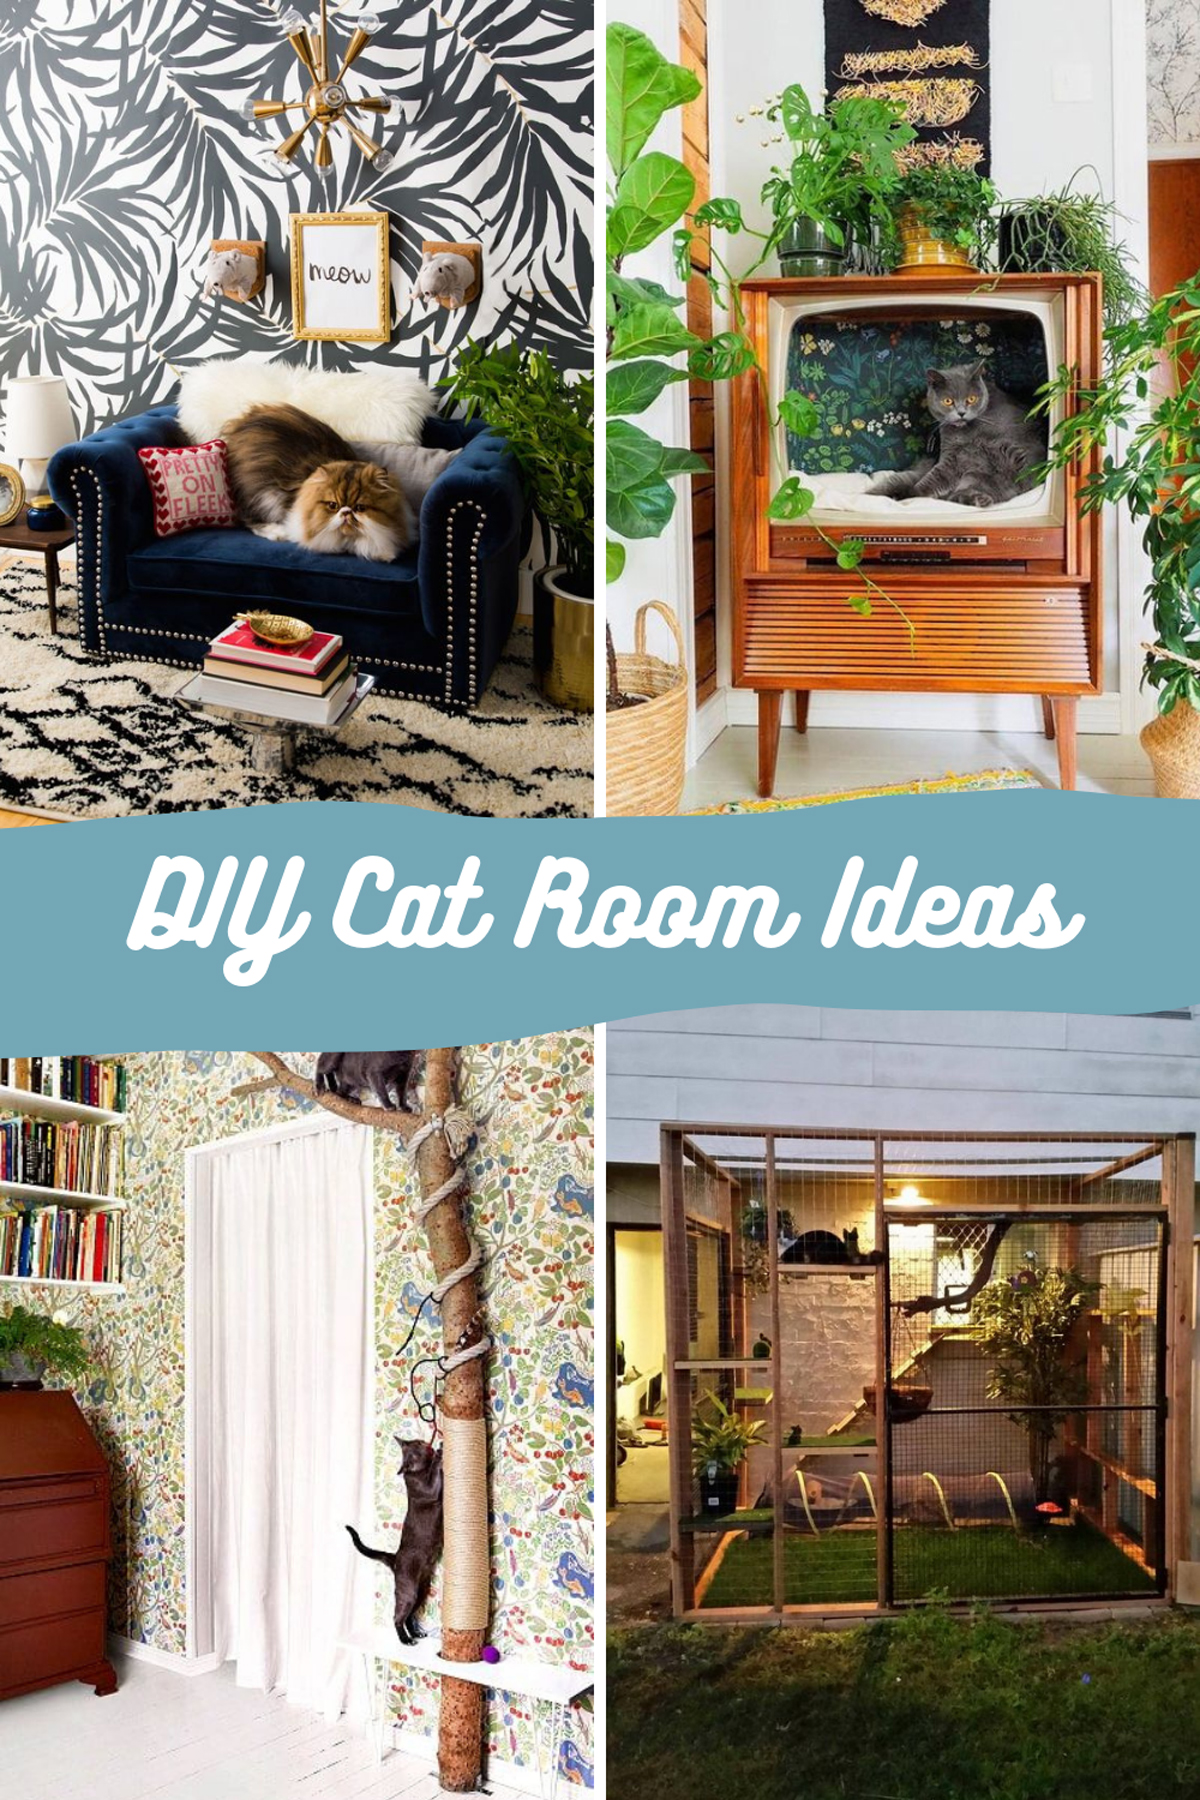 DIY Cat Room Ideas